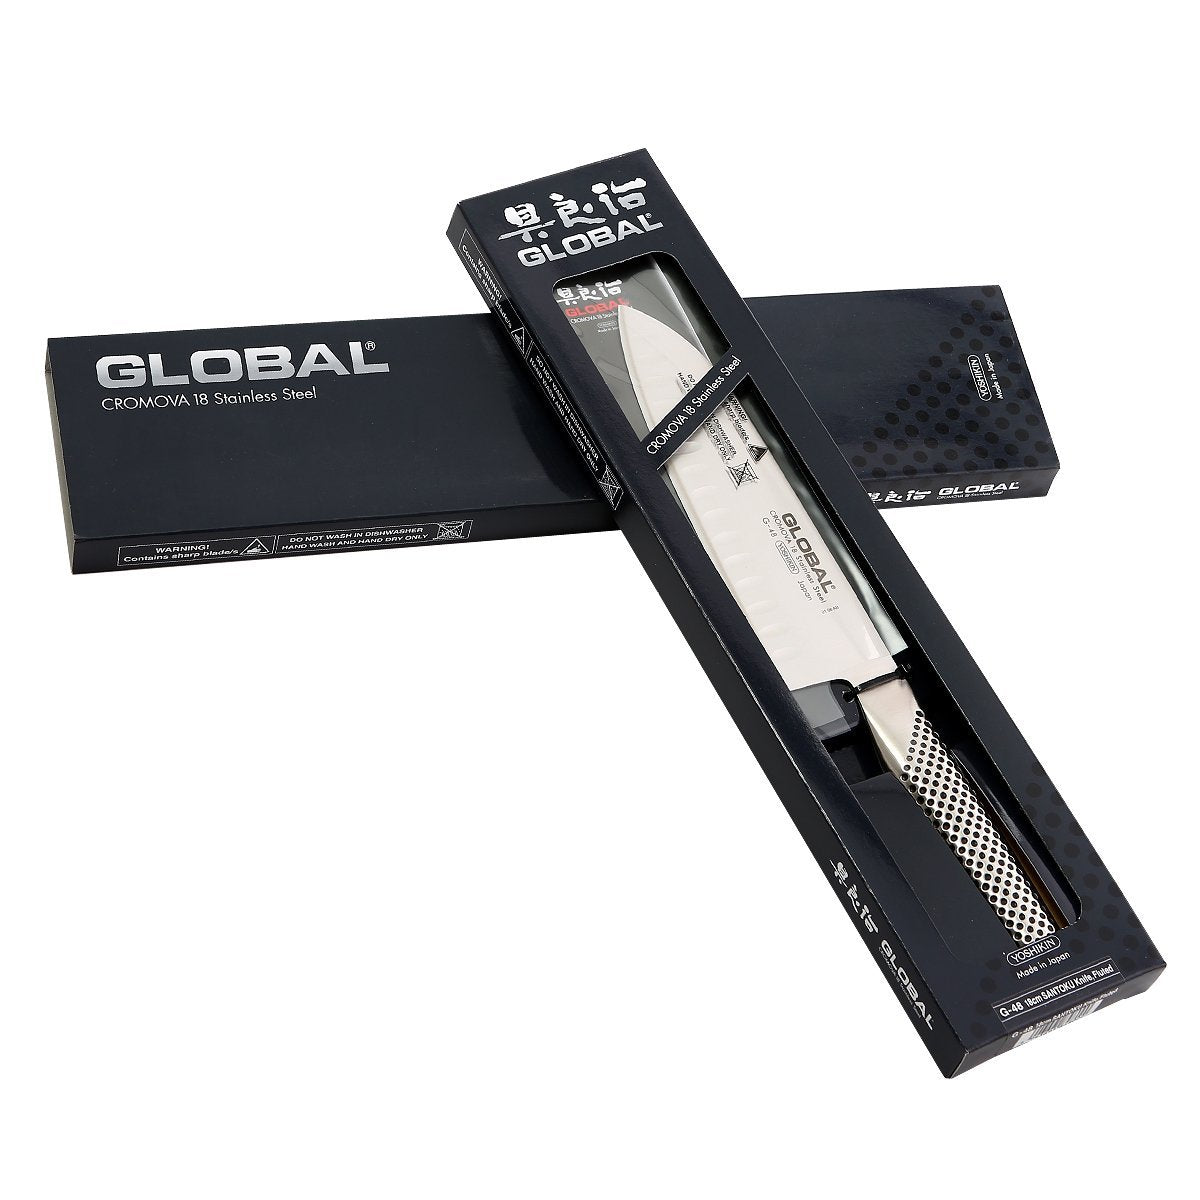 Global Santoku Knife 18cm